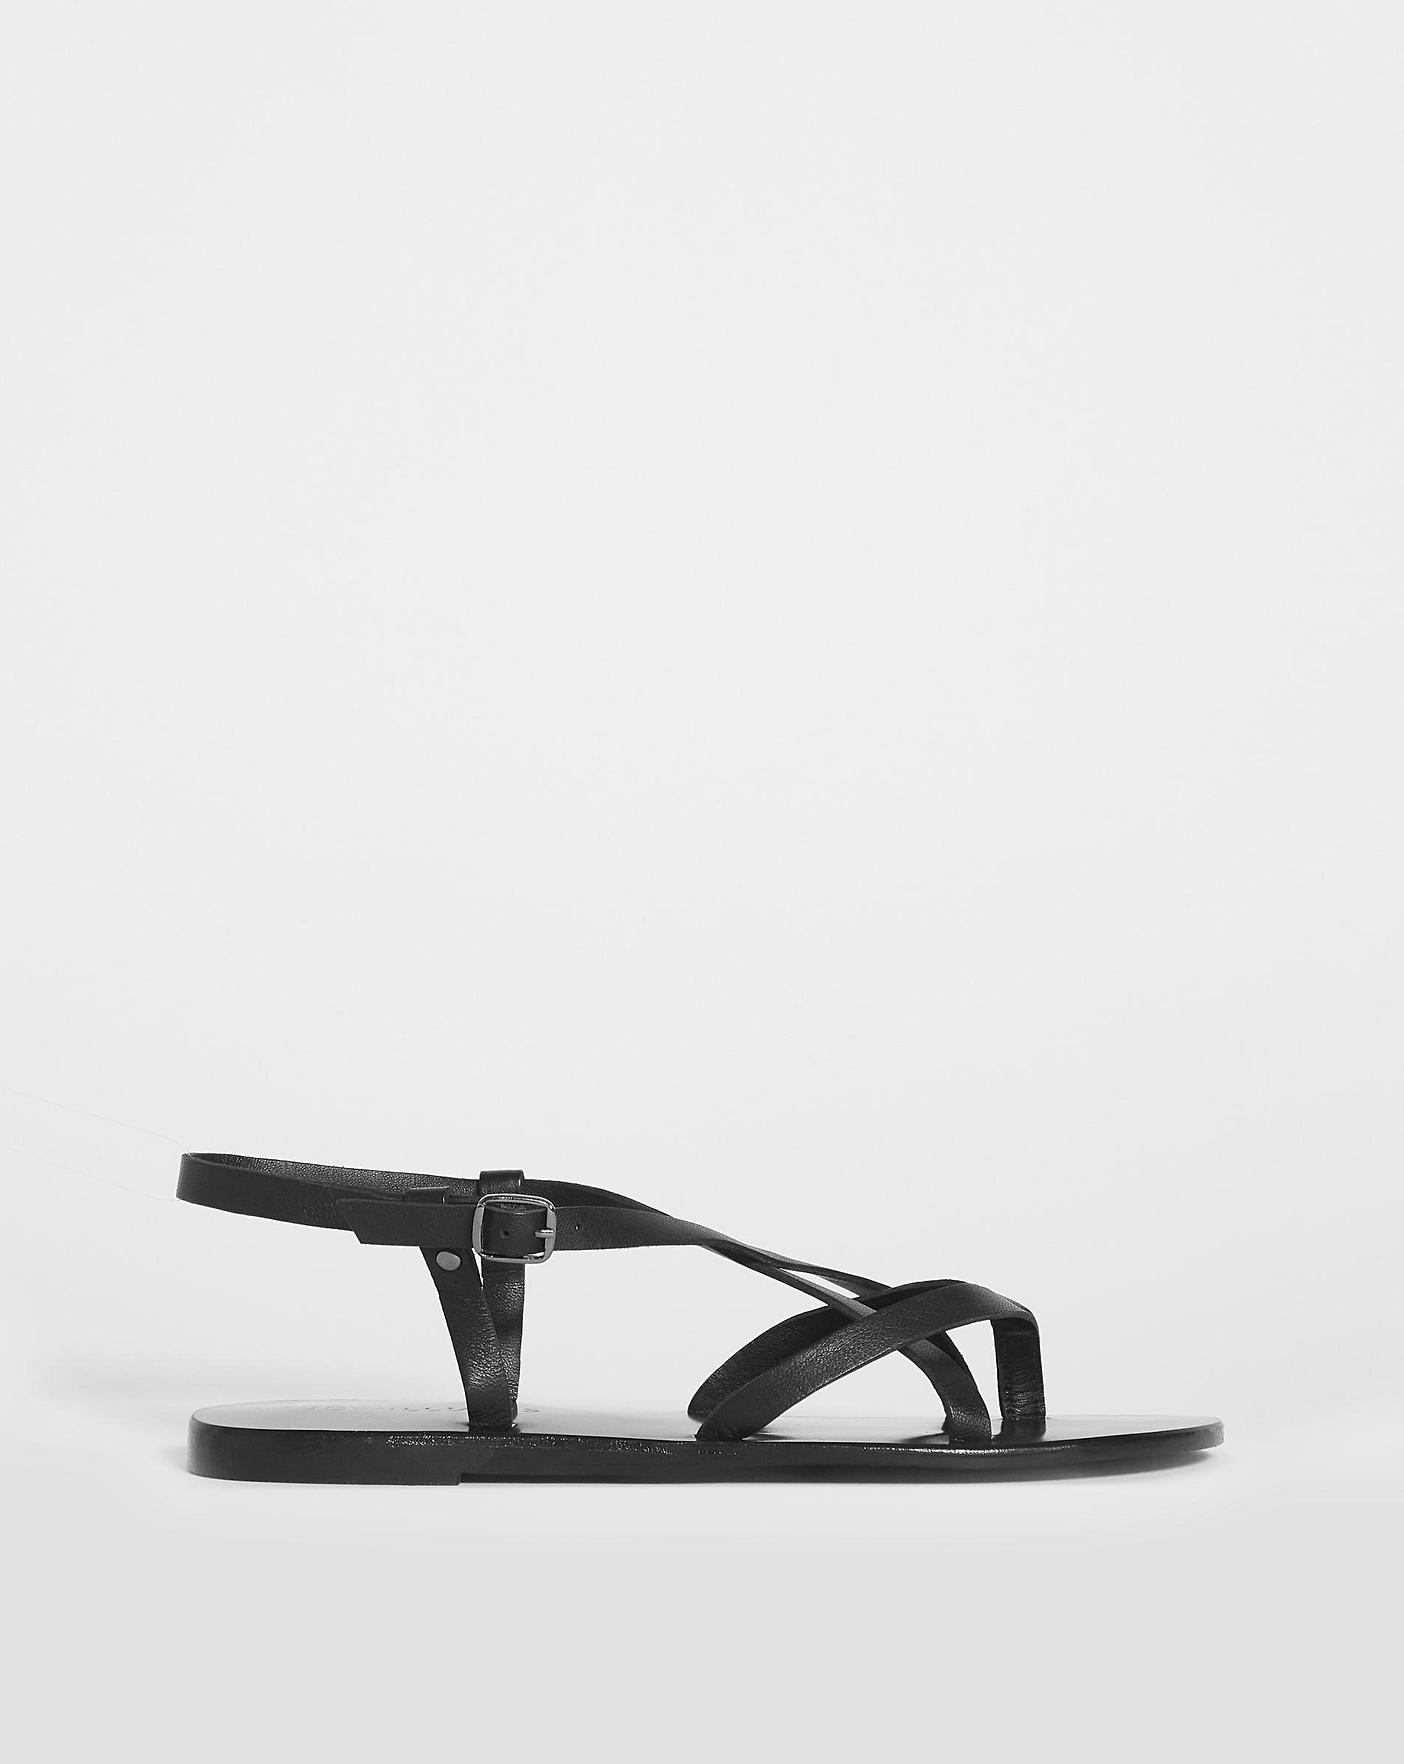 Leather Gladiator Style Sandal E Fit | J D Williams